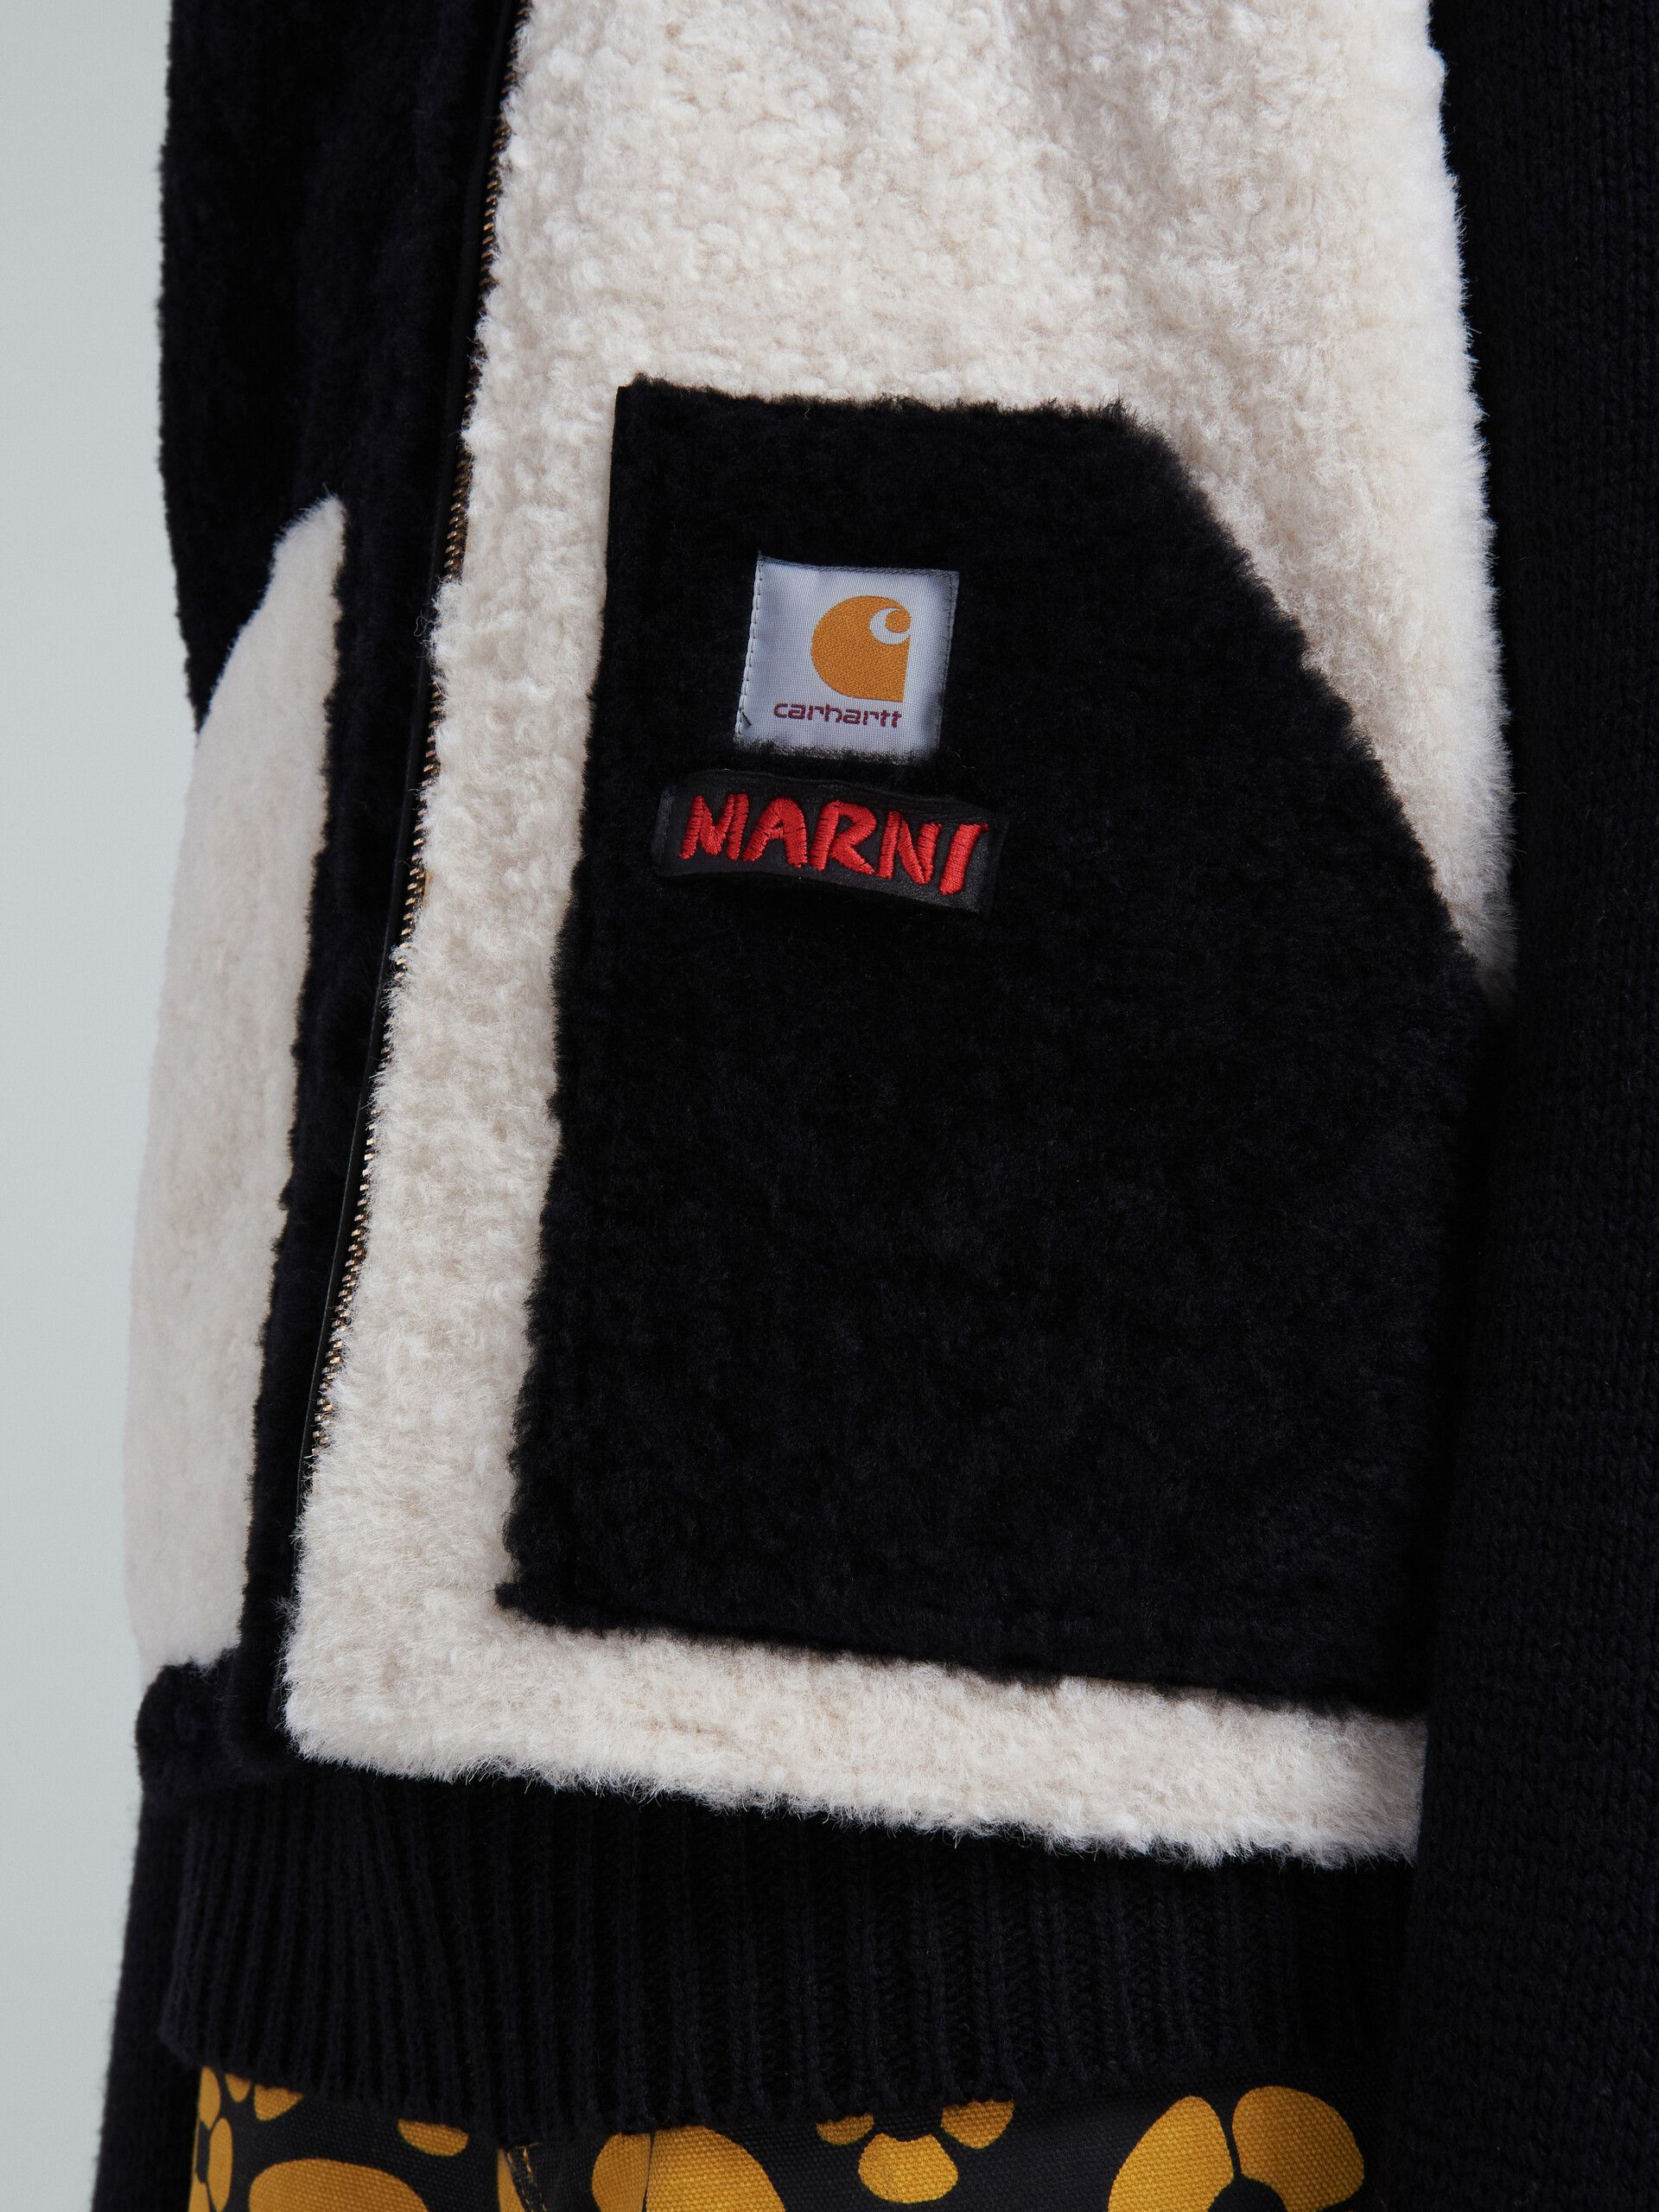 MARNI x CARHARTT WIP - black and white shearling gilet - Waistcoats - Image 5